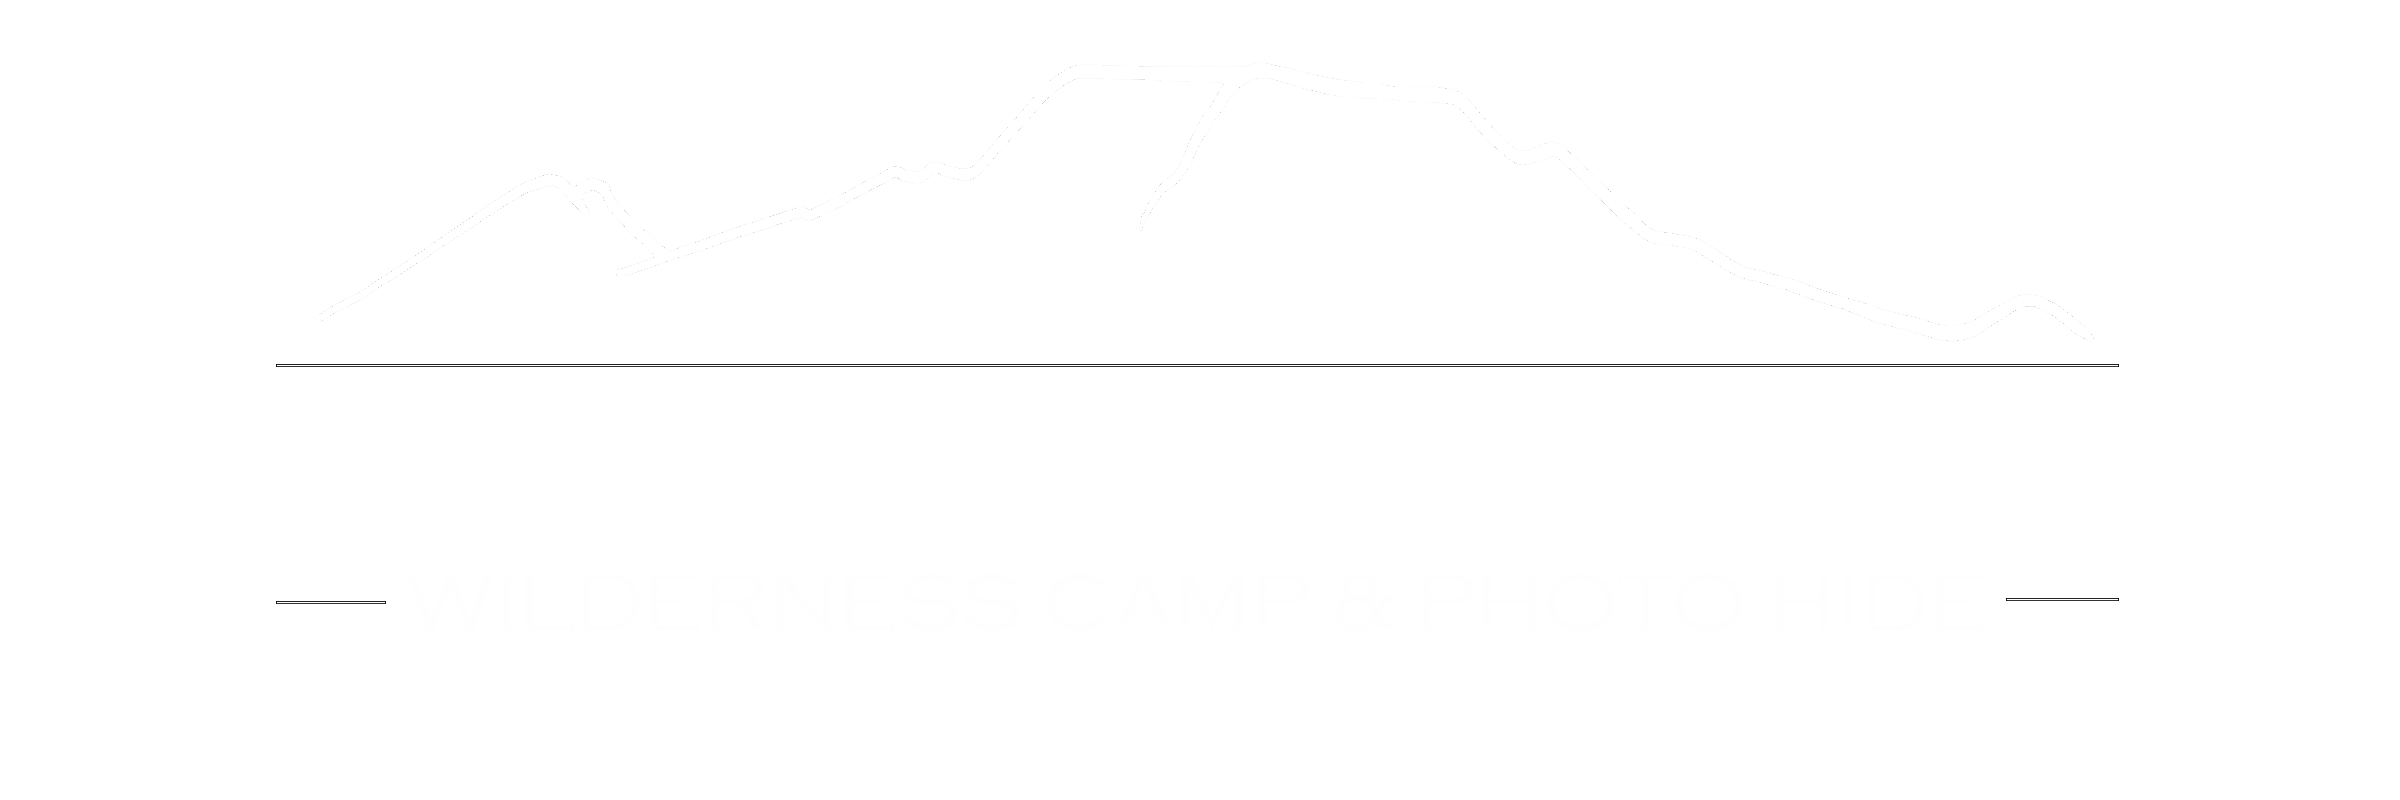 Shompole Wilderness